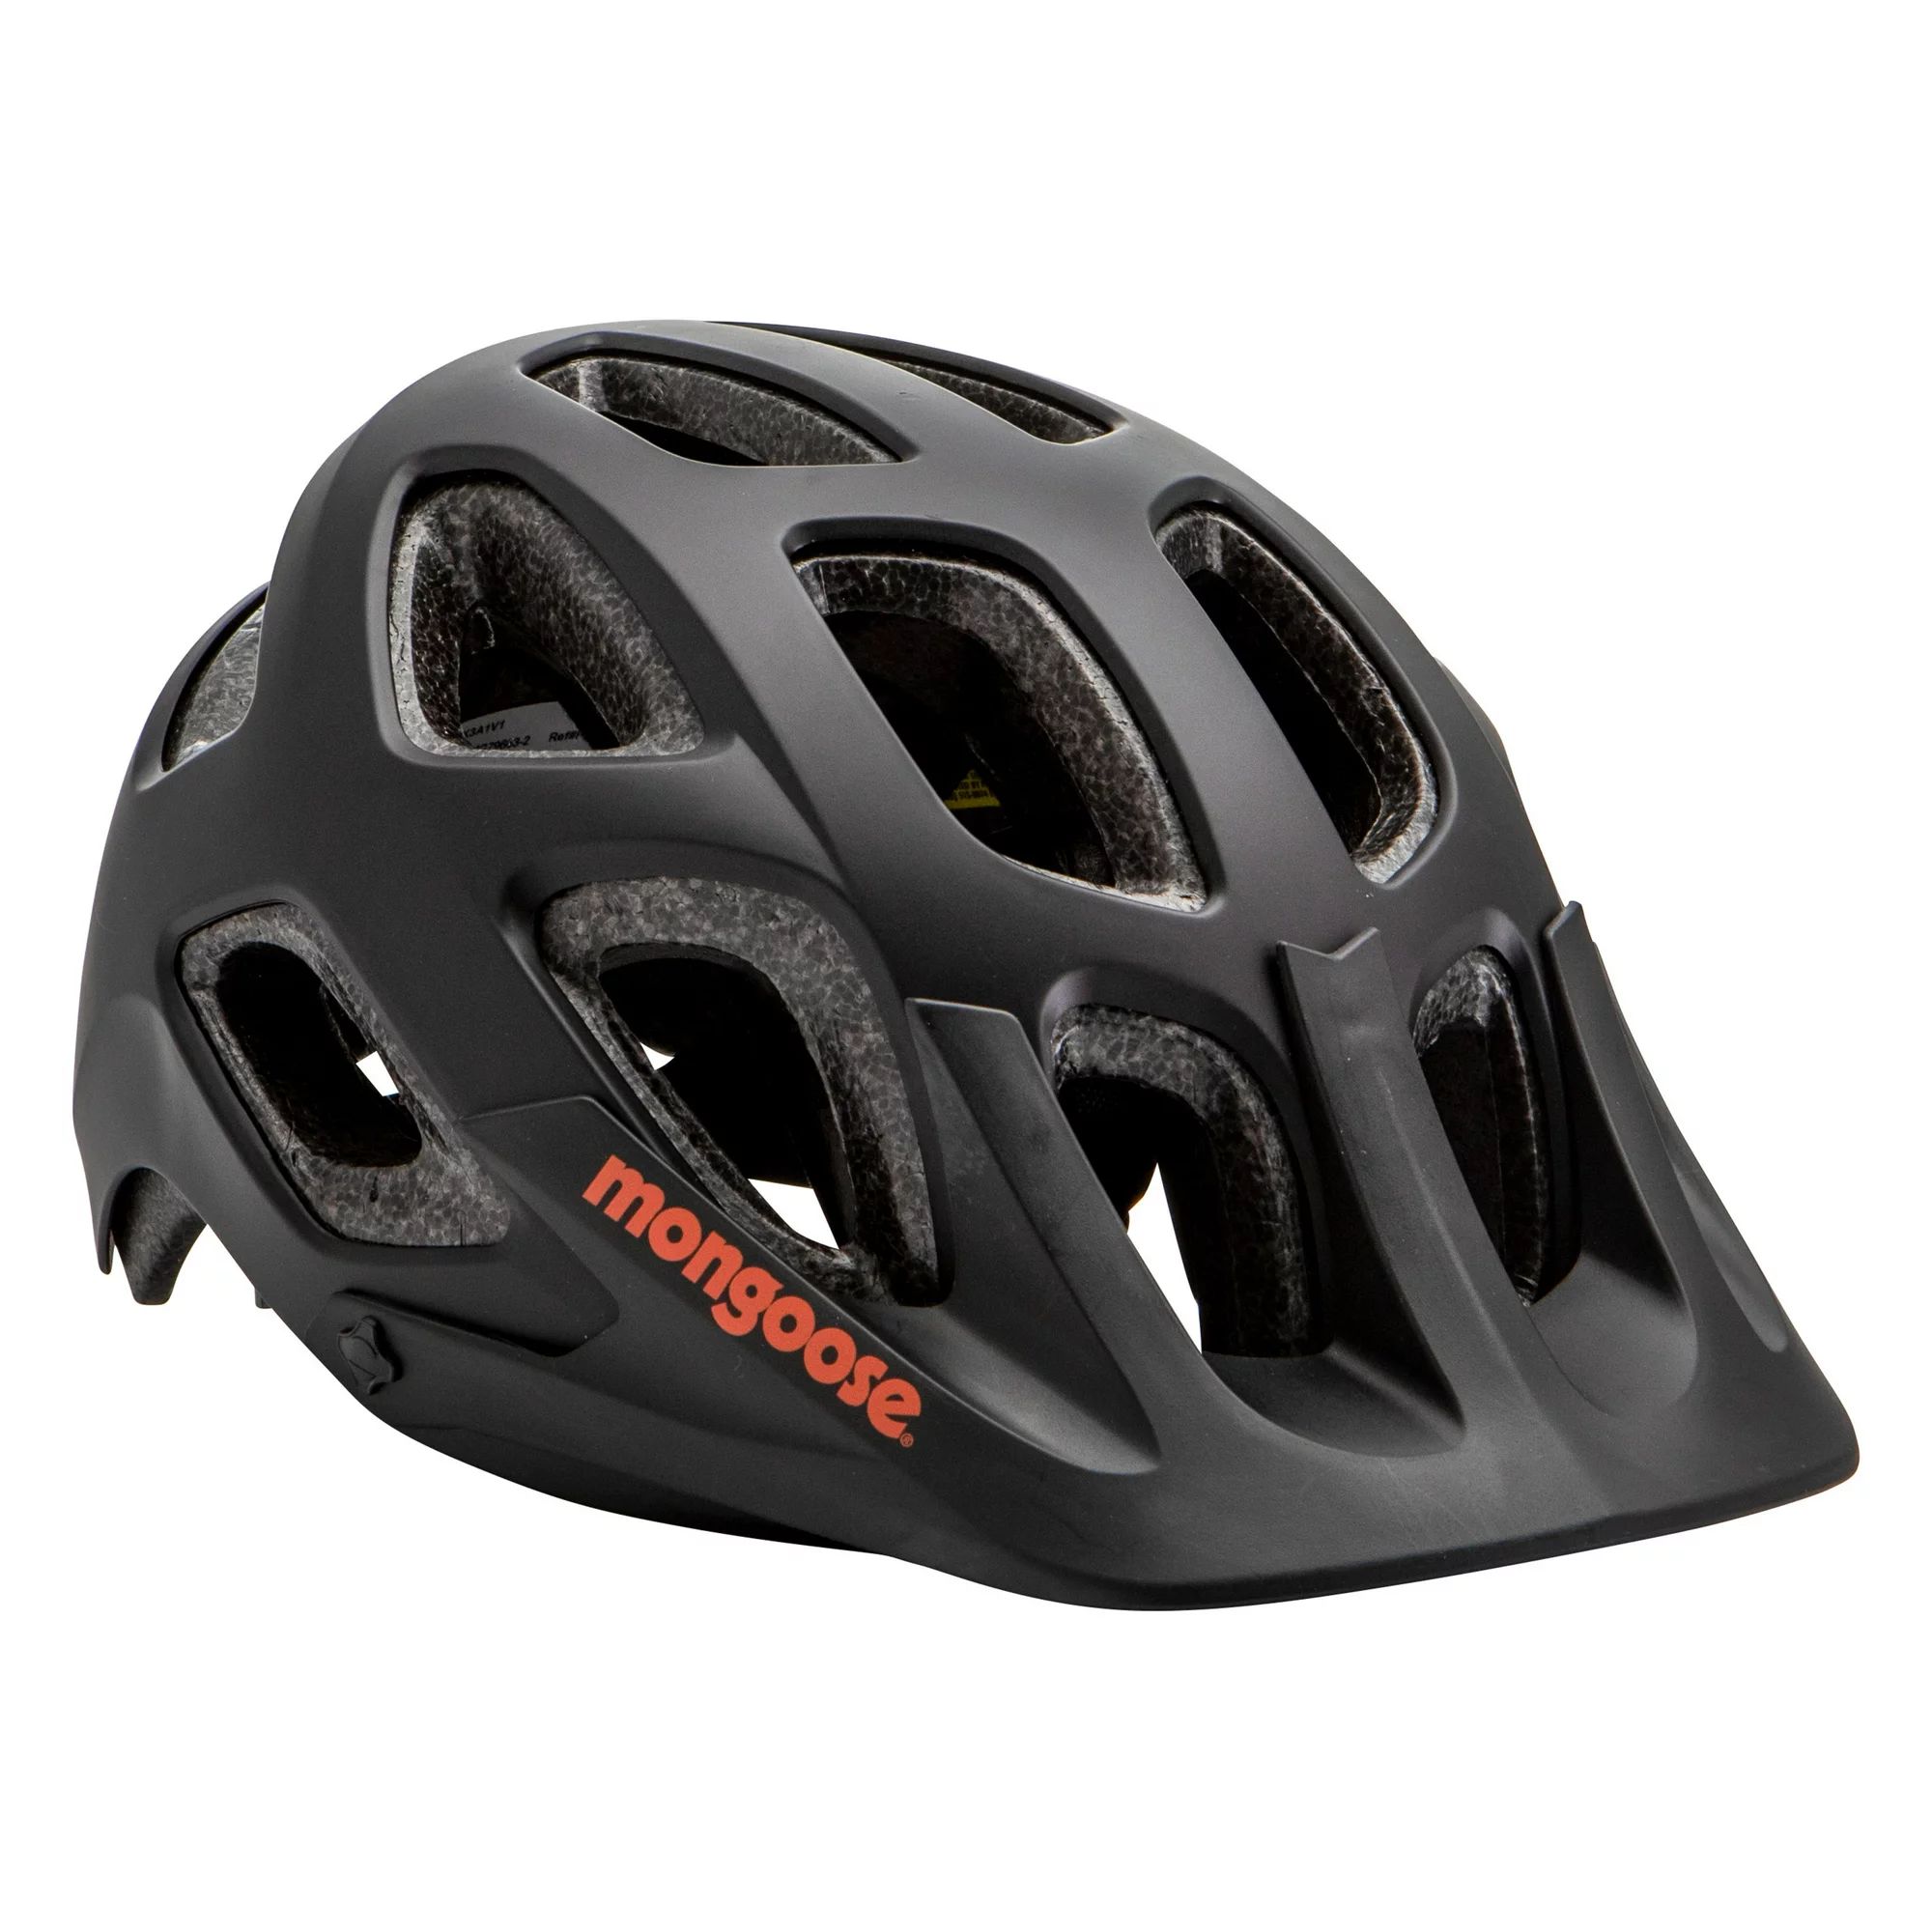 Mongoose Session Adult Bicycling Helmet, black | Walmart (US)